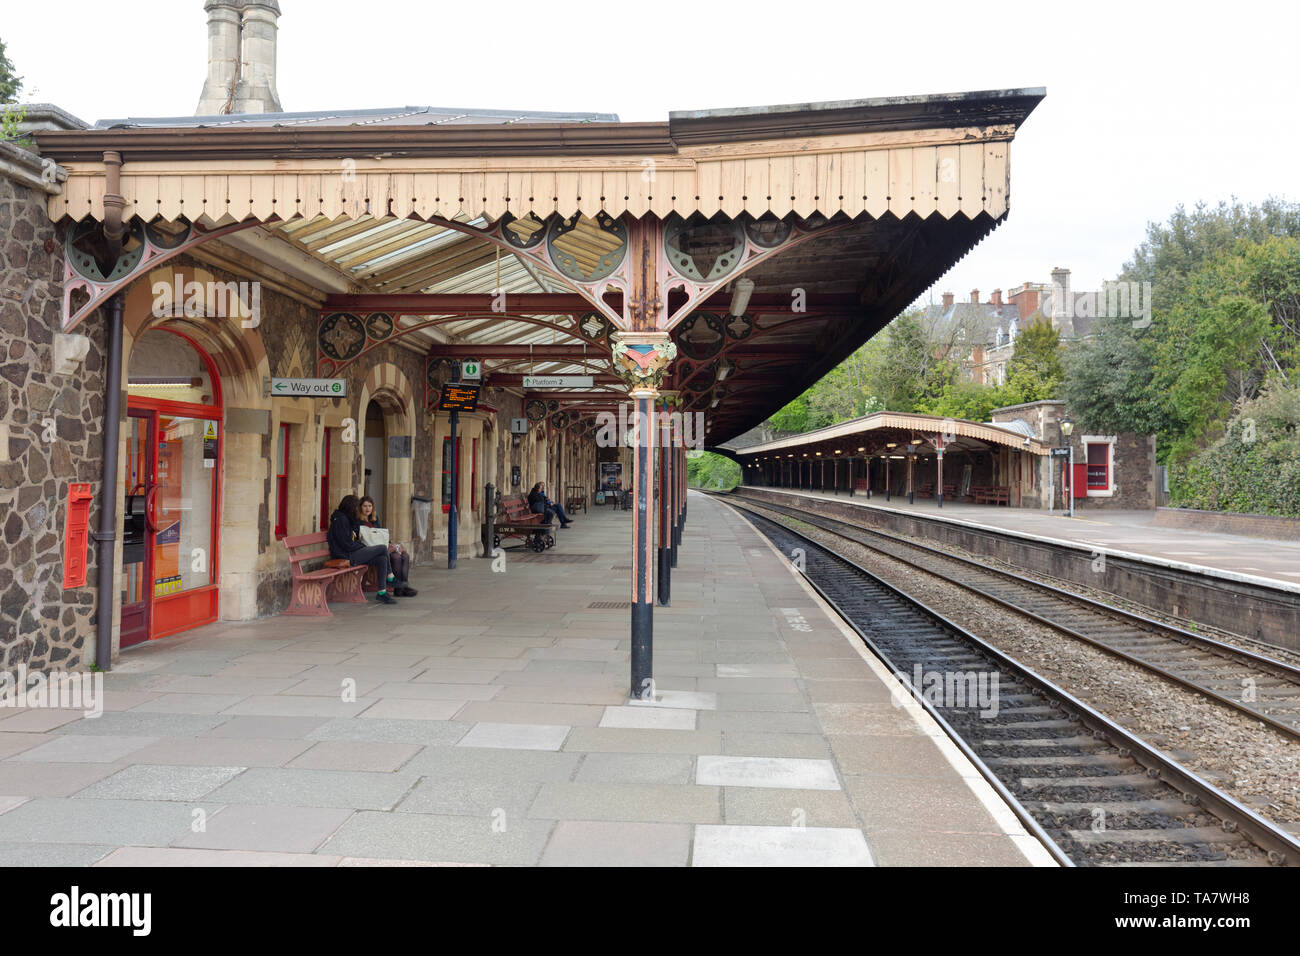 Great Malvern railway station - main train station in Malvern, Worcestershire UK Stock Photo